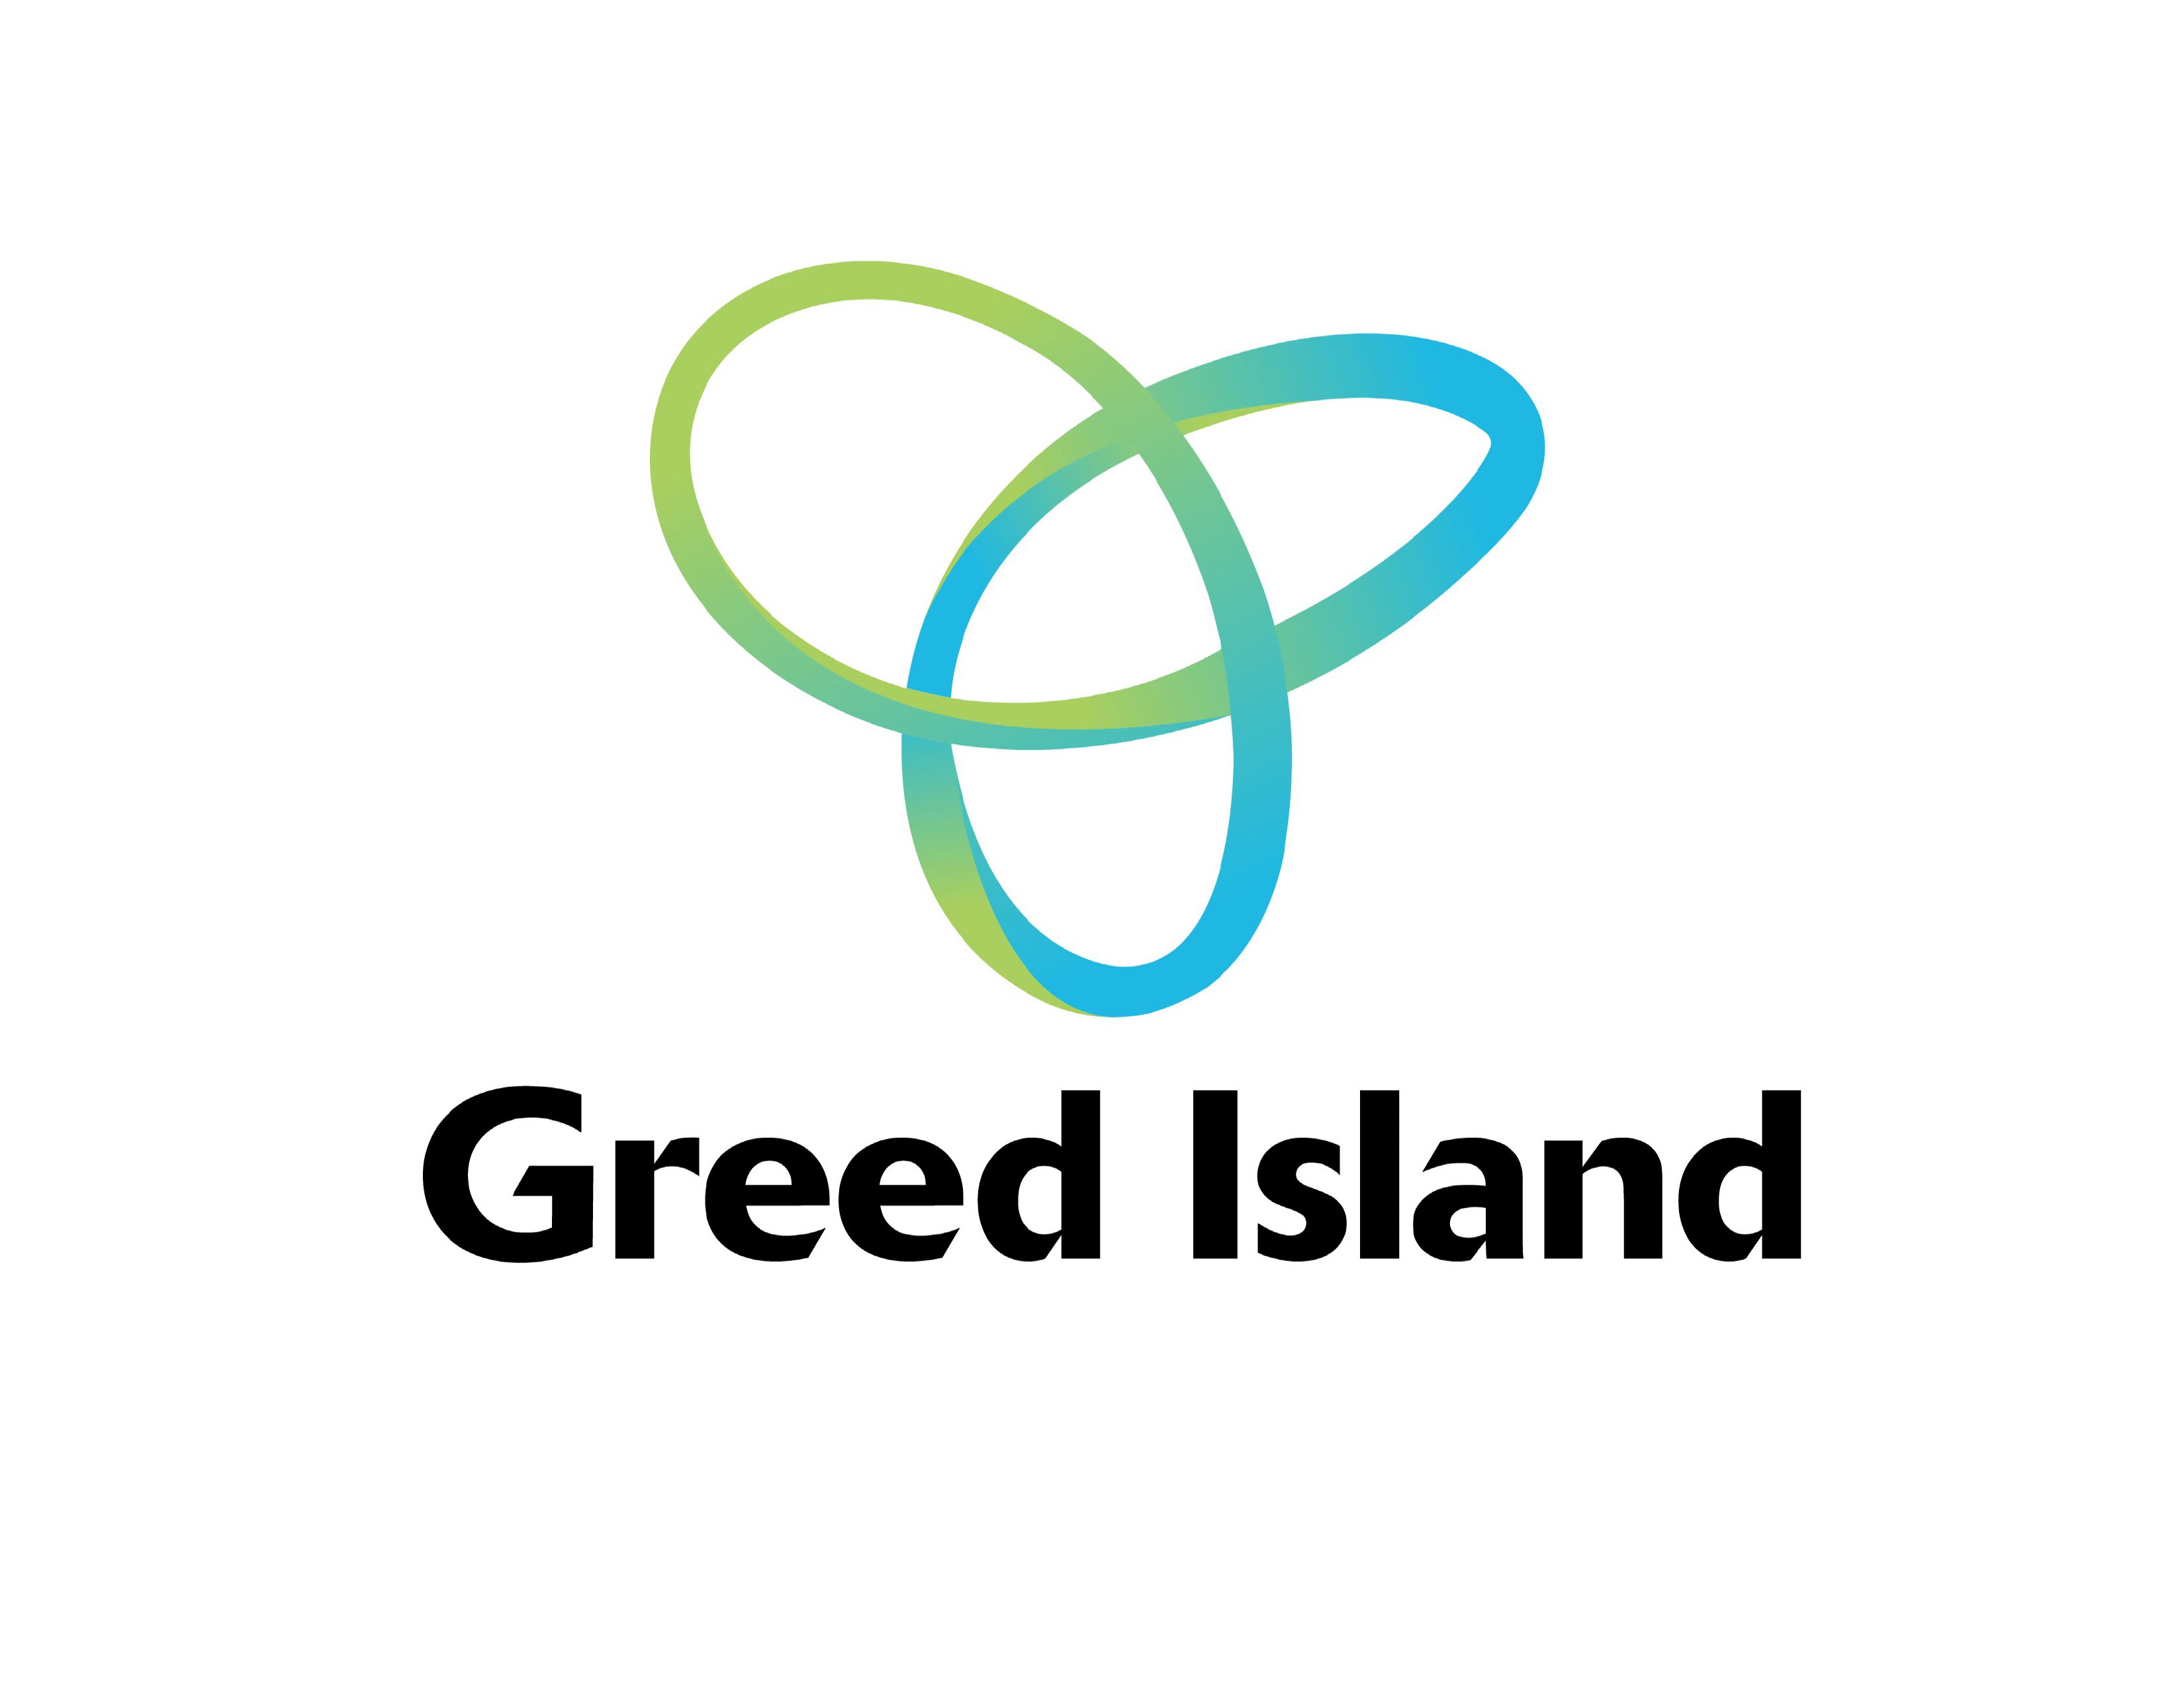  GREED ISLAND